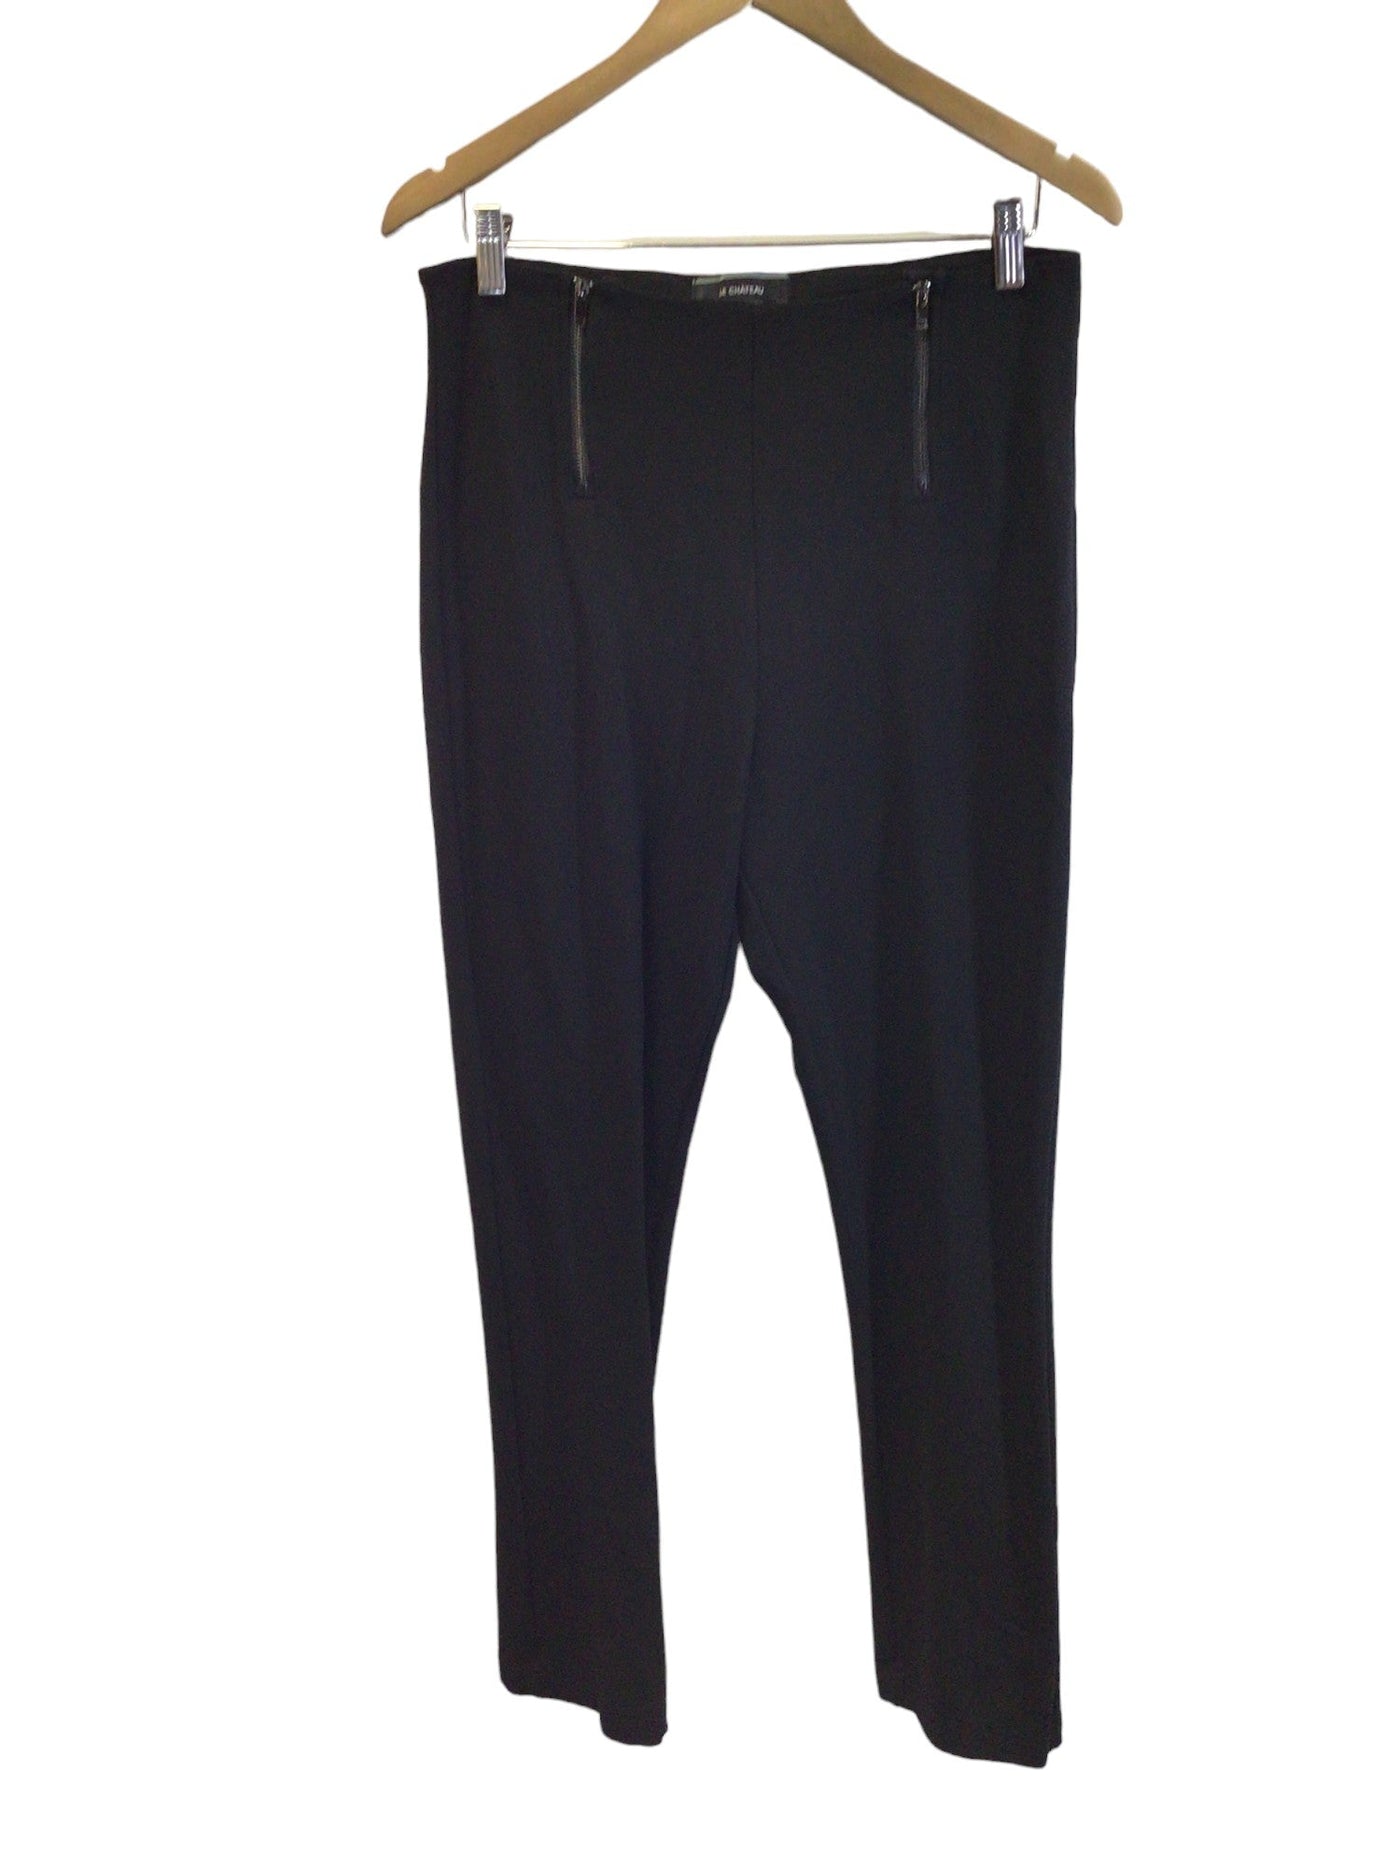 CHATEAU Women Work Pants Regular fit in Black - Size M | 16.29 $ KOOP